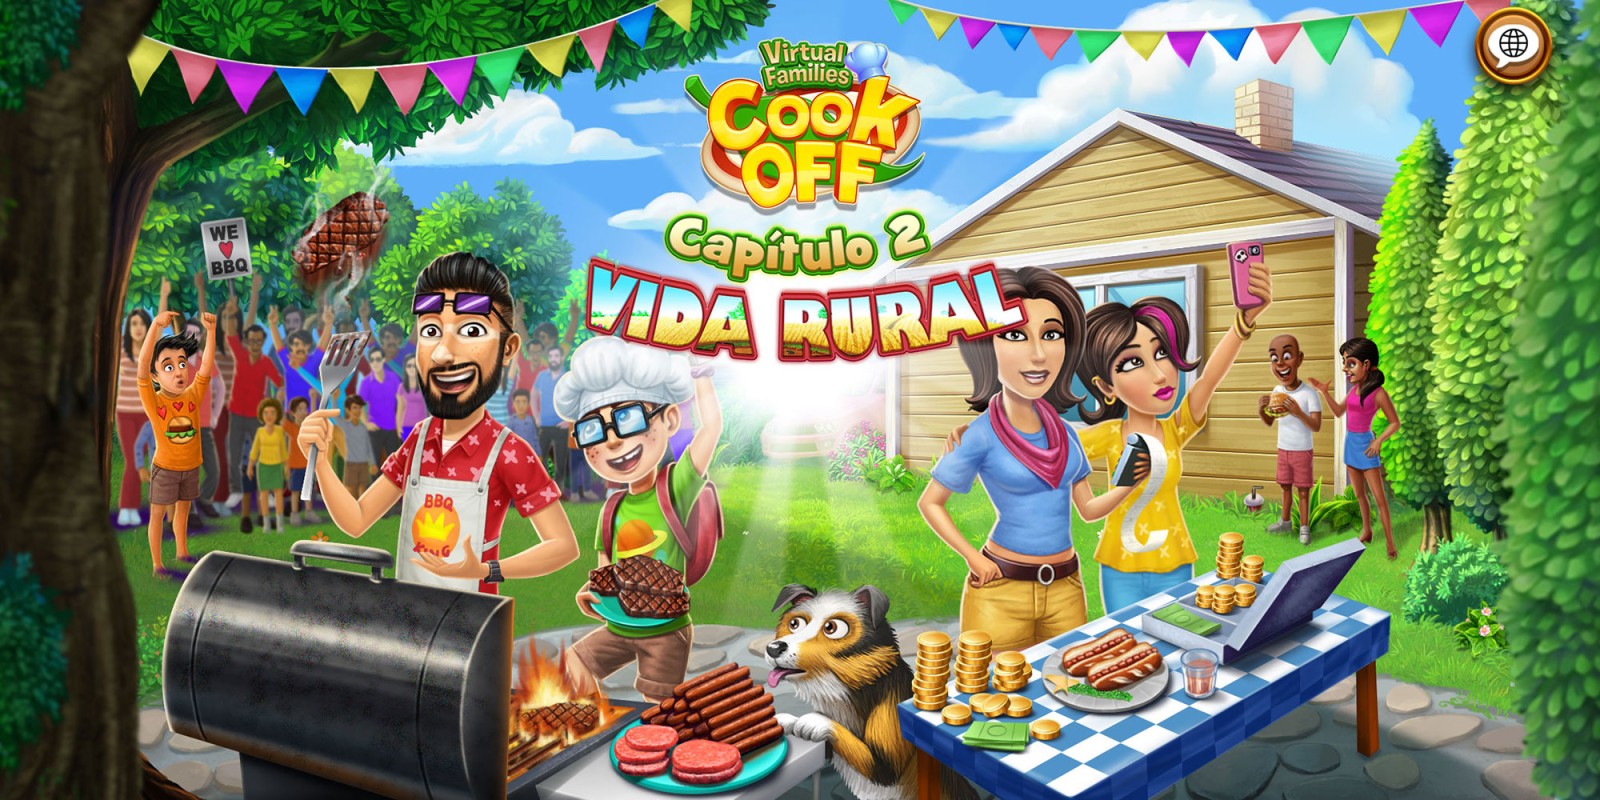 Virtual Families Cook Off: Capítulo 2 - Vida rural